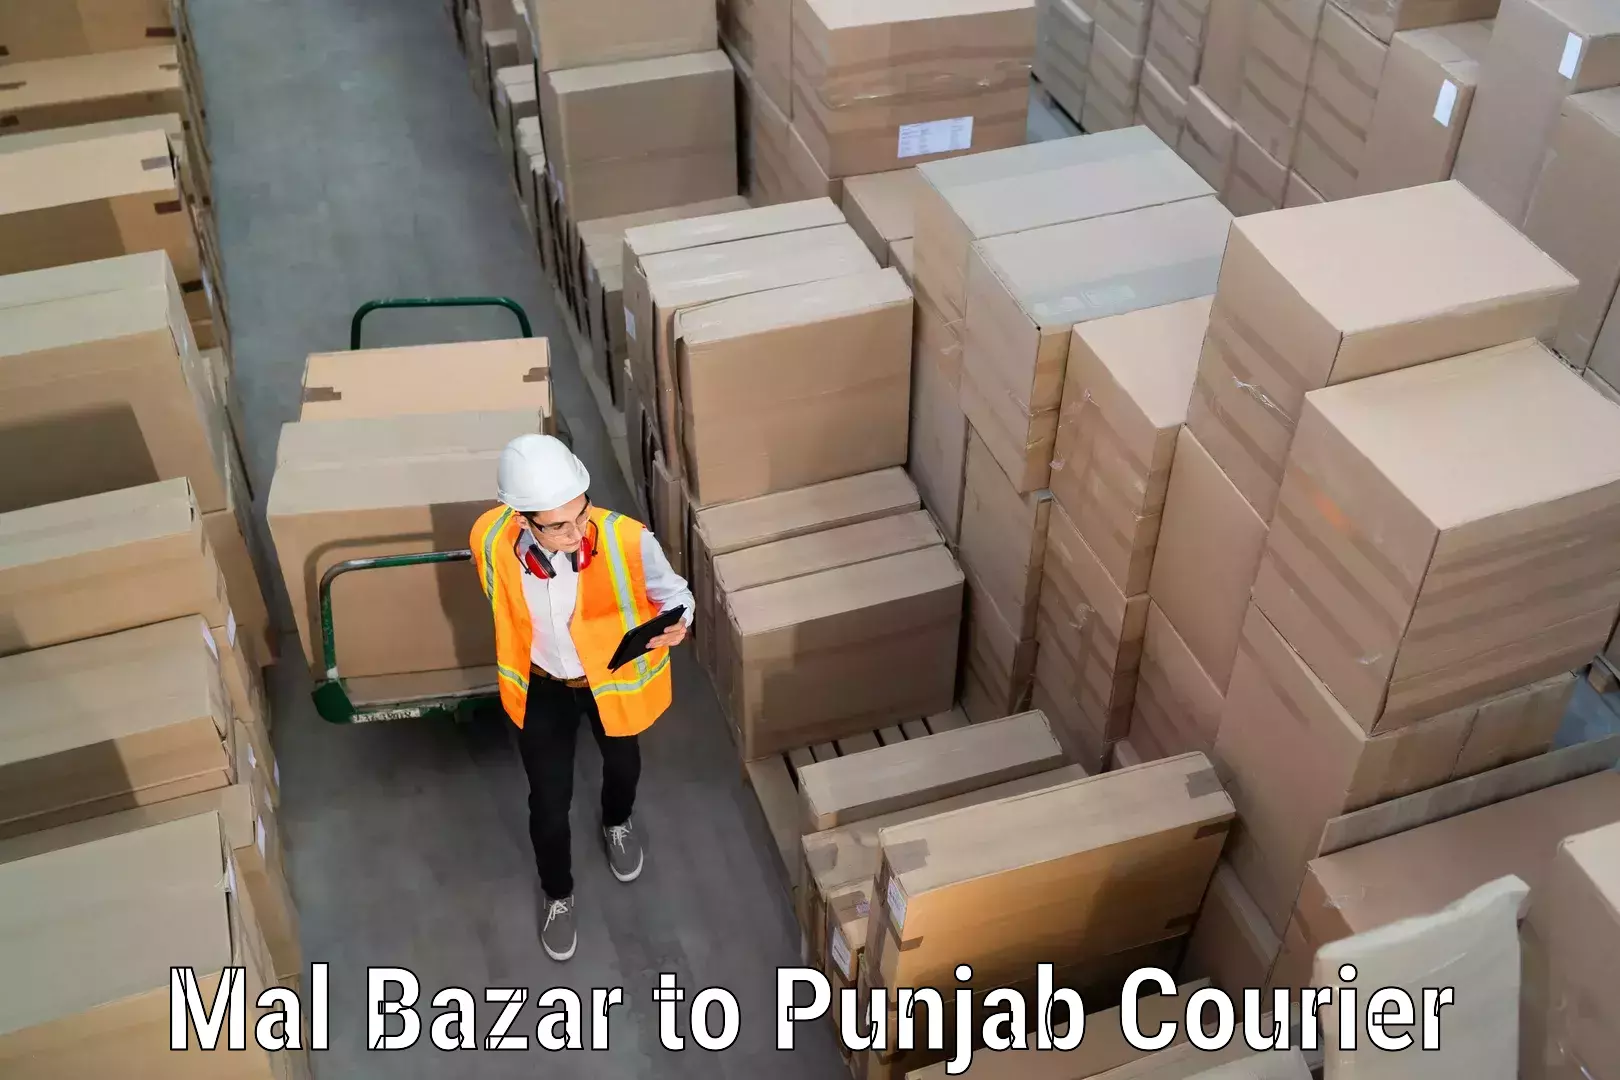 Household goods transport service Mal Bazar to Punjab